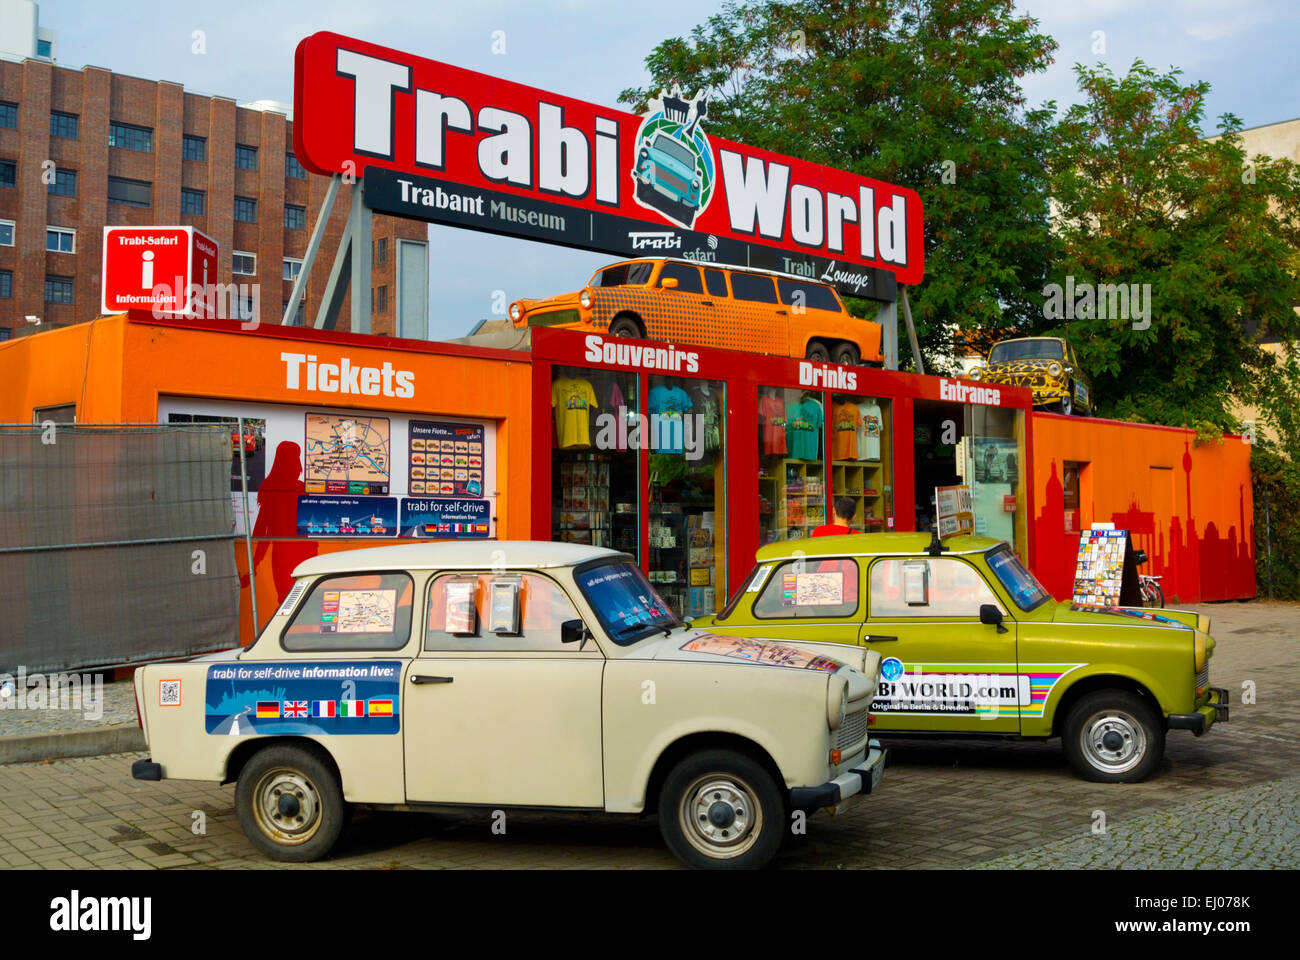 Trabi world, Trabant museum exterior, Friedrichstadt, Mitte district, central Berlin, Germany Stock Photo